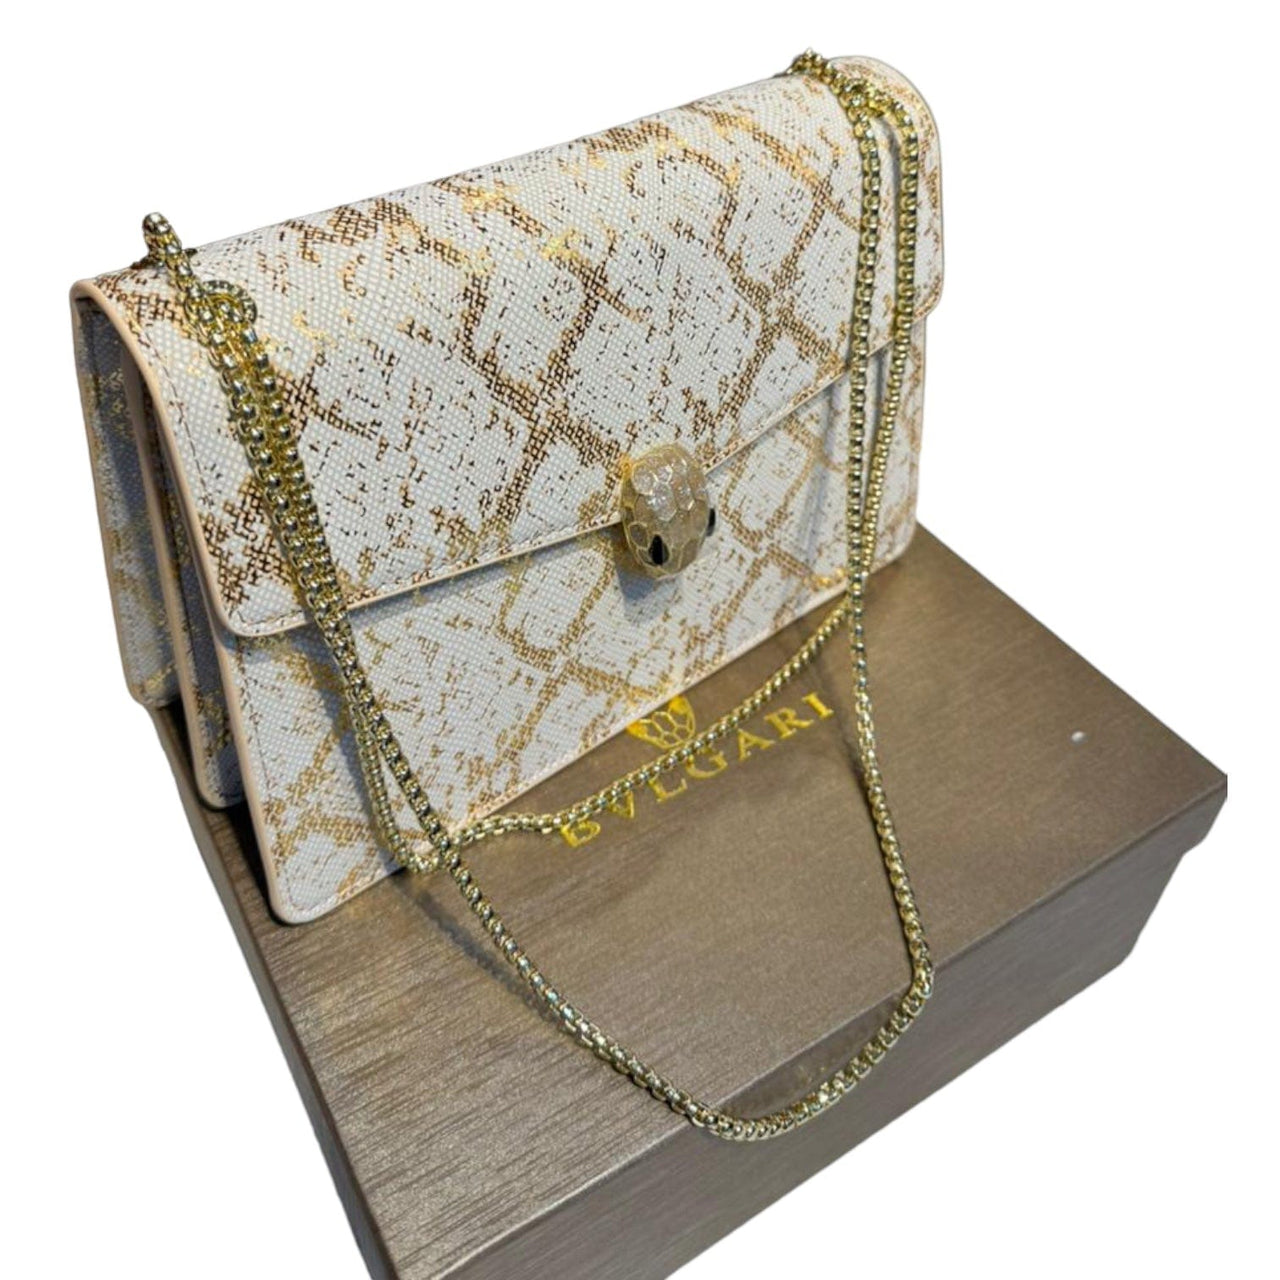 The Bag Couture Handbags, Wallets & Cases BVLGARI Serpenti Cabochon Shoulder Bag Ivory